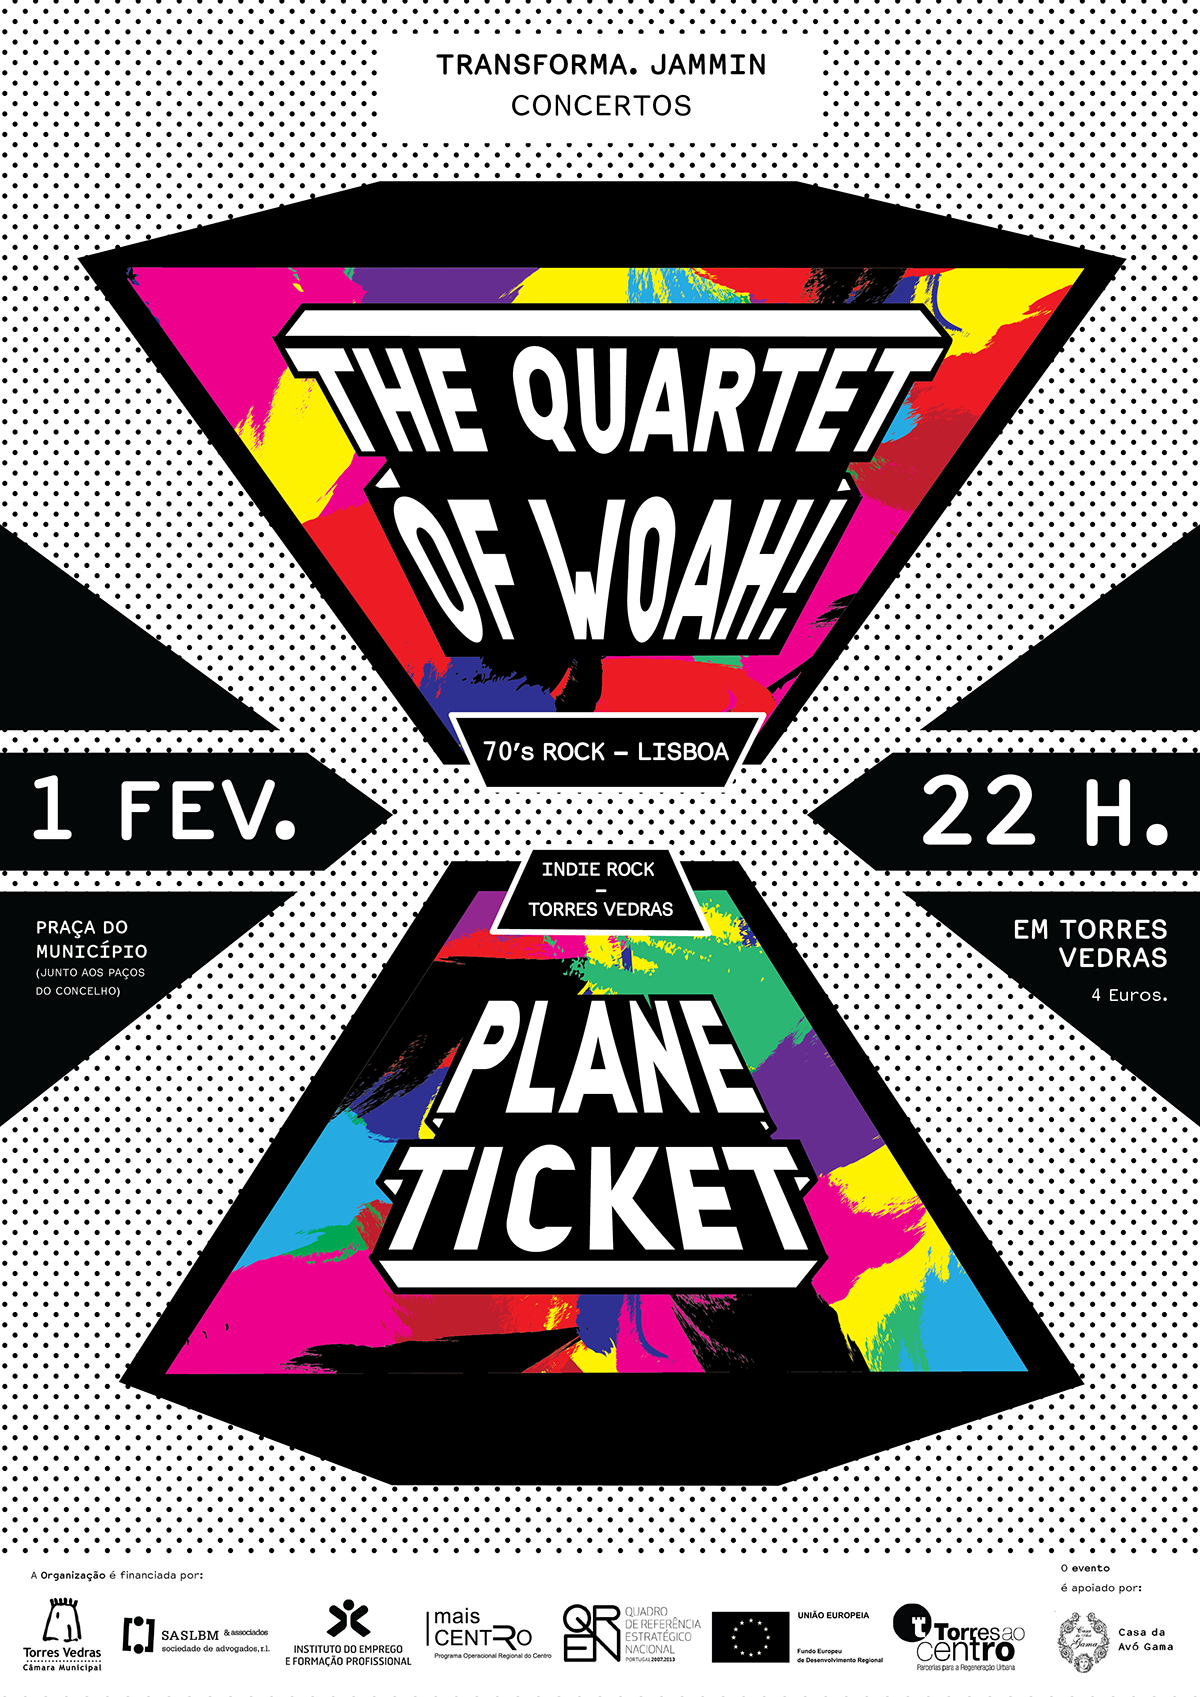 psychadelic poster image color The Quartet Of Woa plane ticket torres vedras